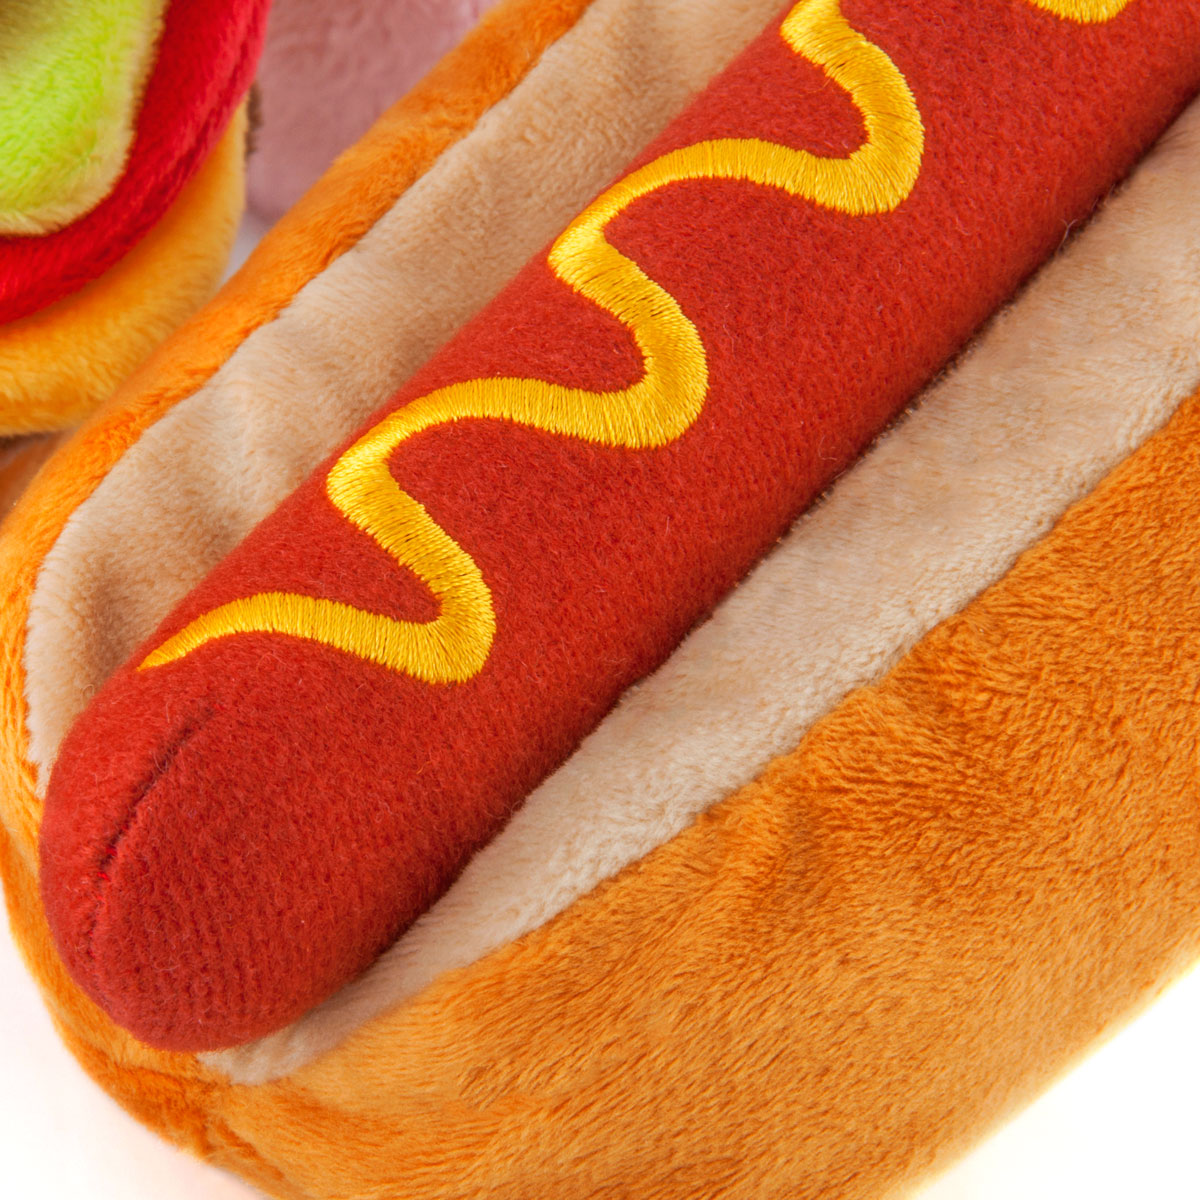 https://halaspaws.com/wp-content/uploads/2021/05/PLAY-American-Classic-Food-Toy-Hot-Dog-closeup.jpg